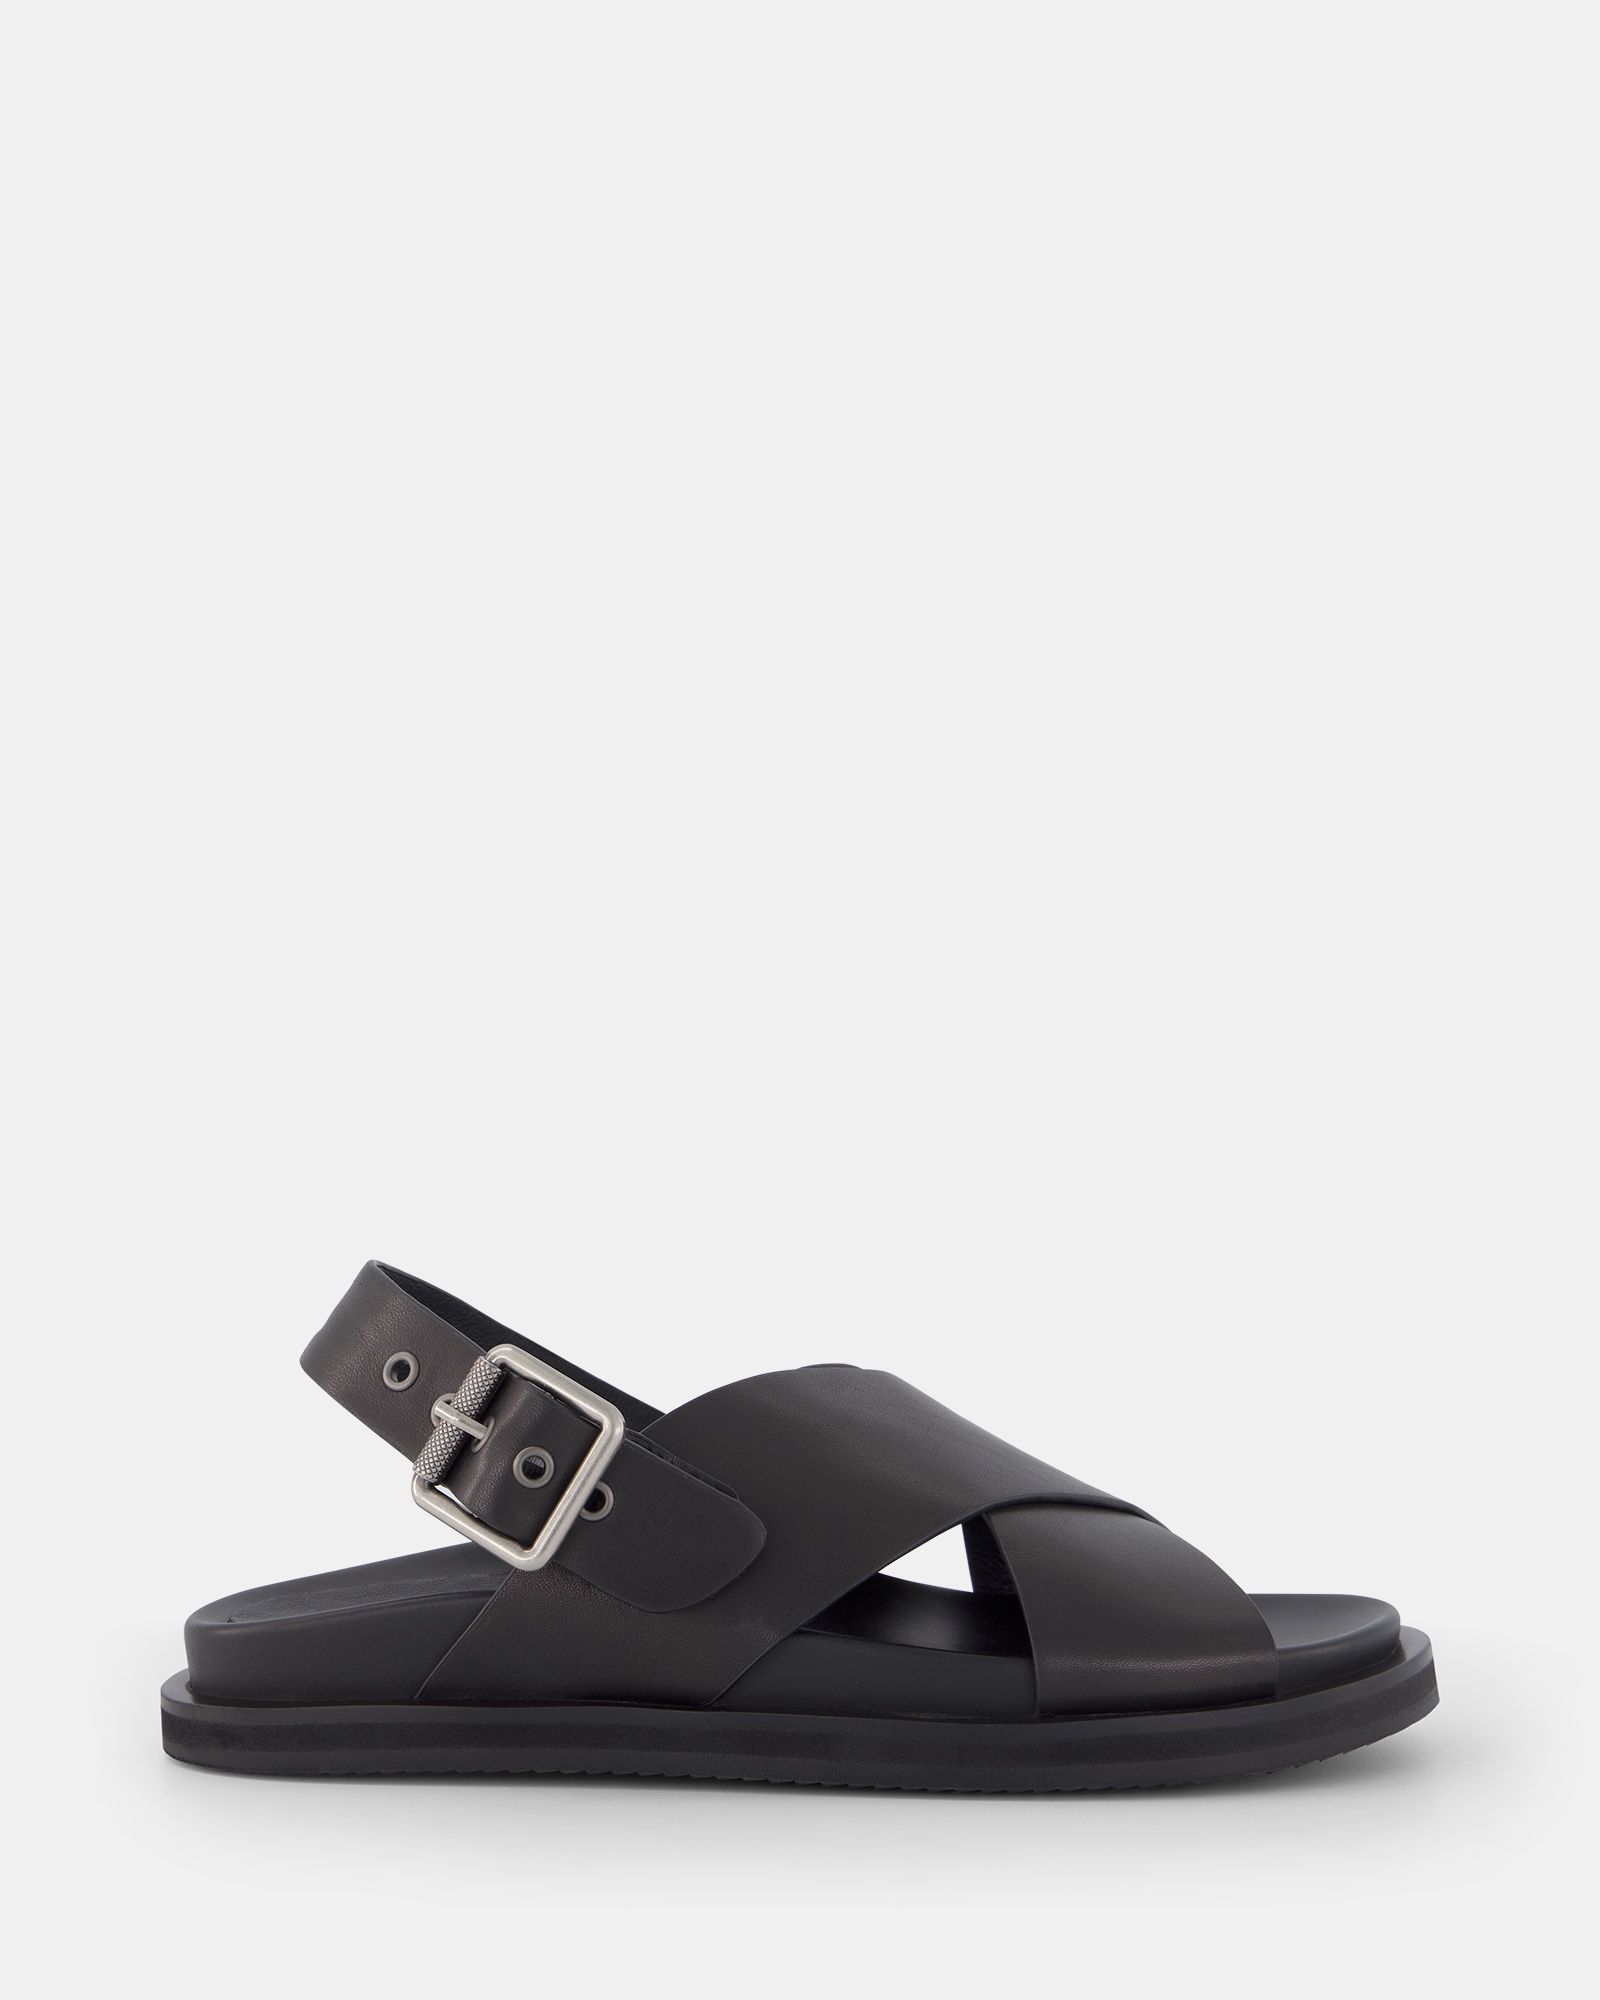 Buy MARS Black sandals Online at Shoe Connection